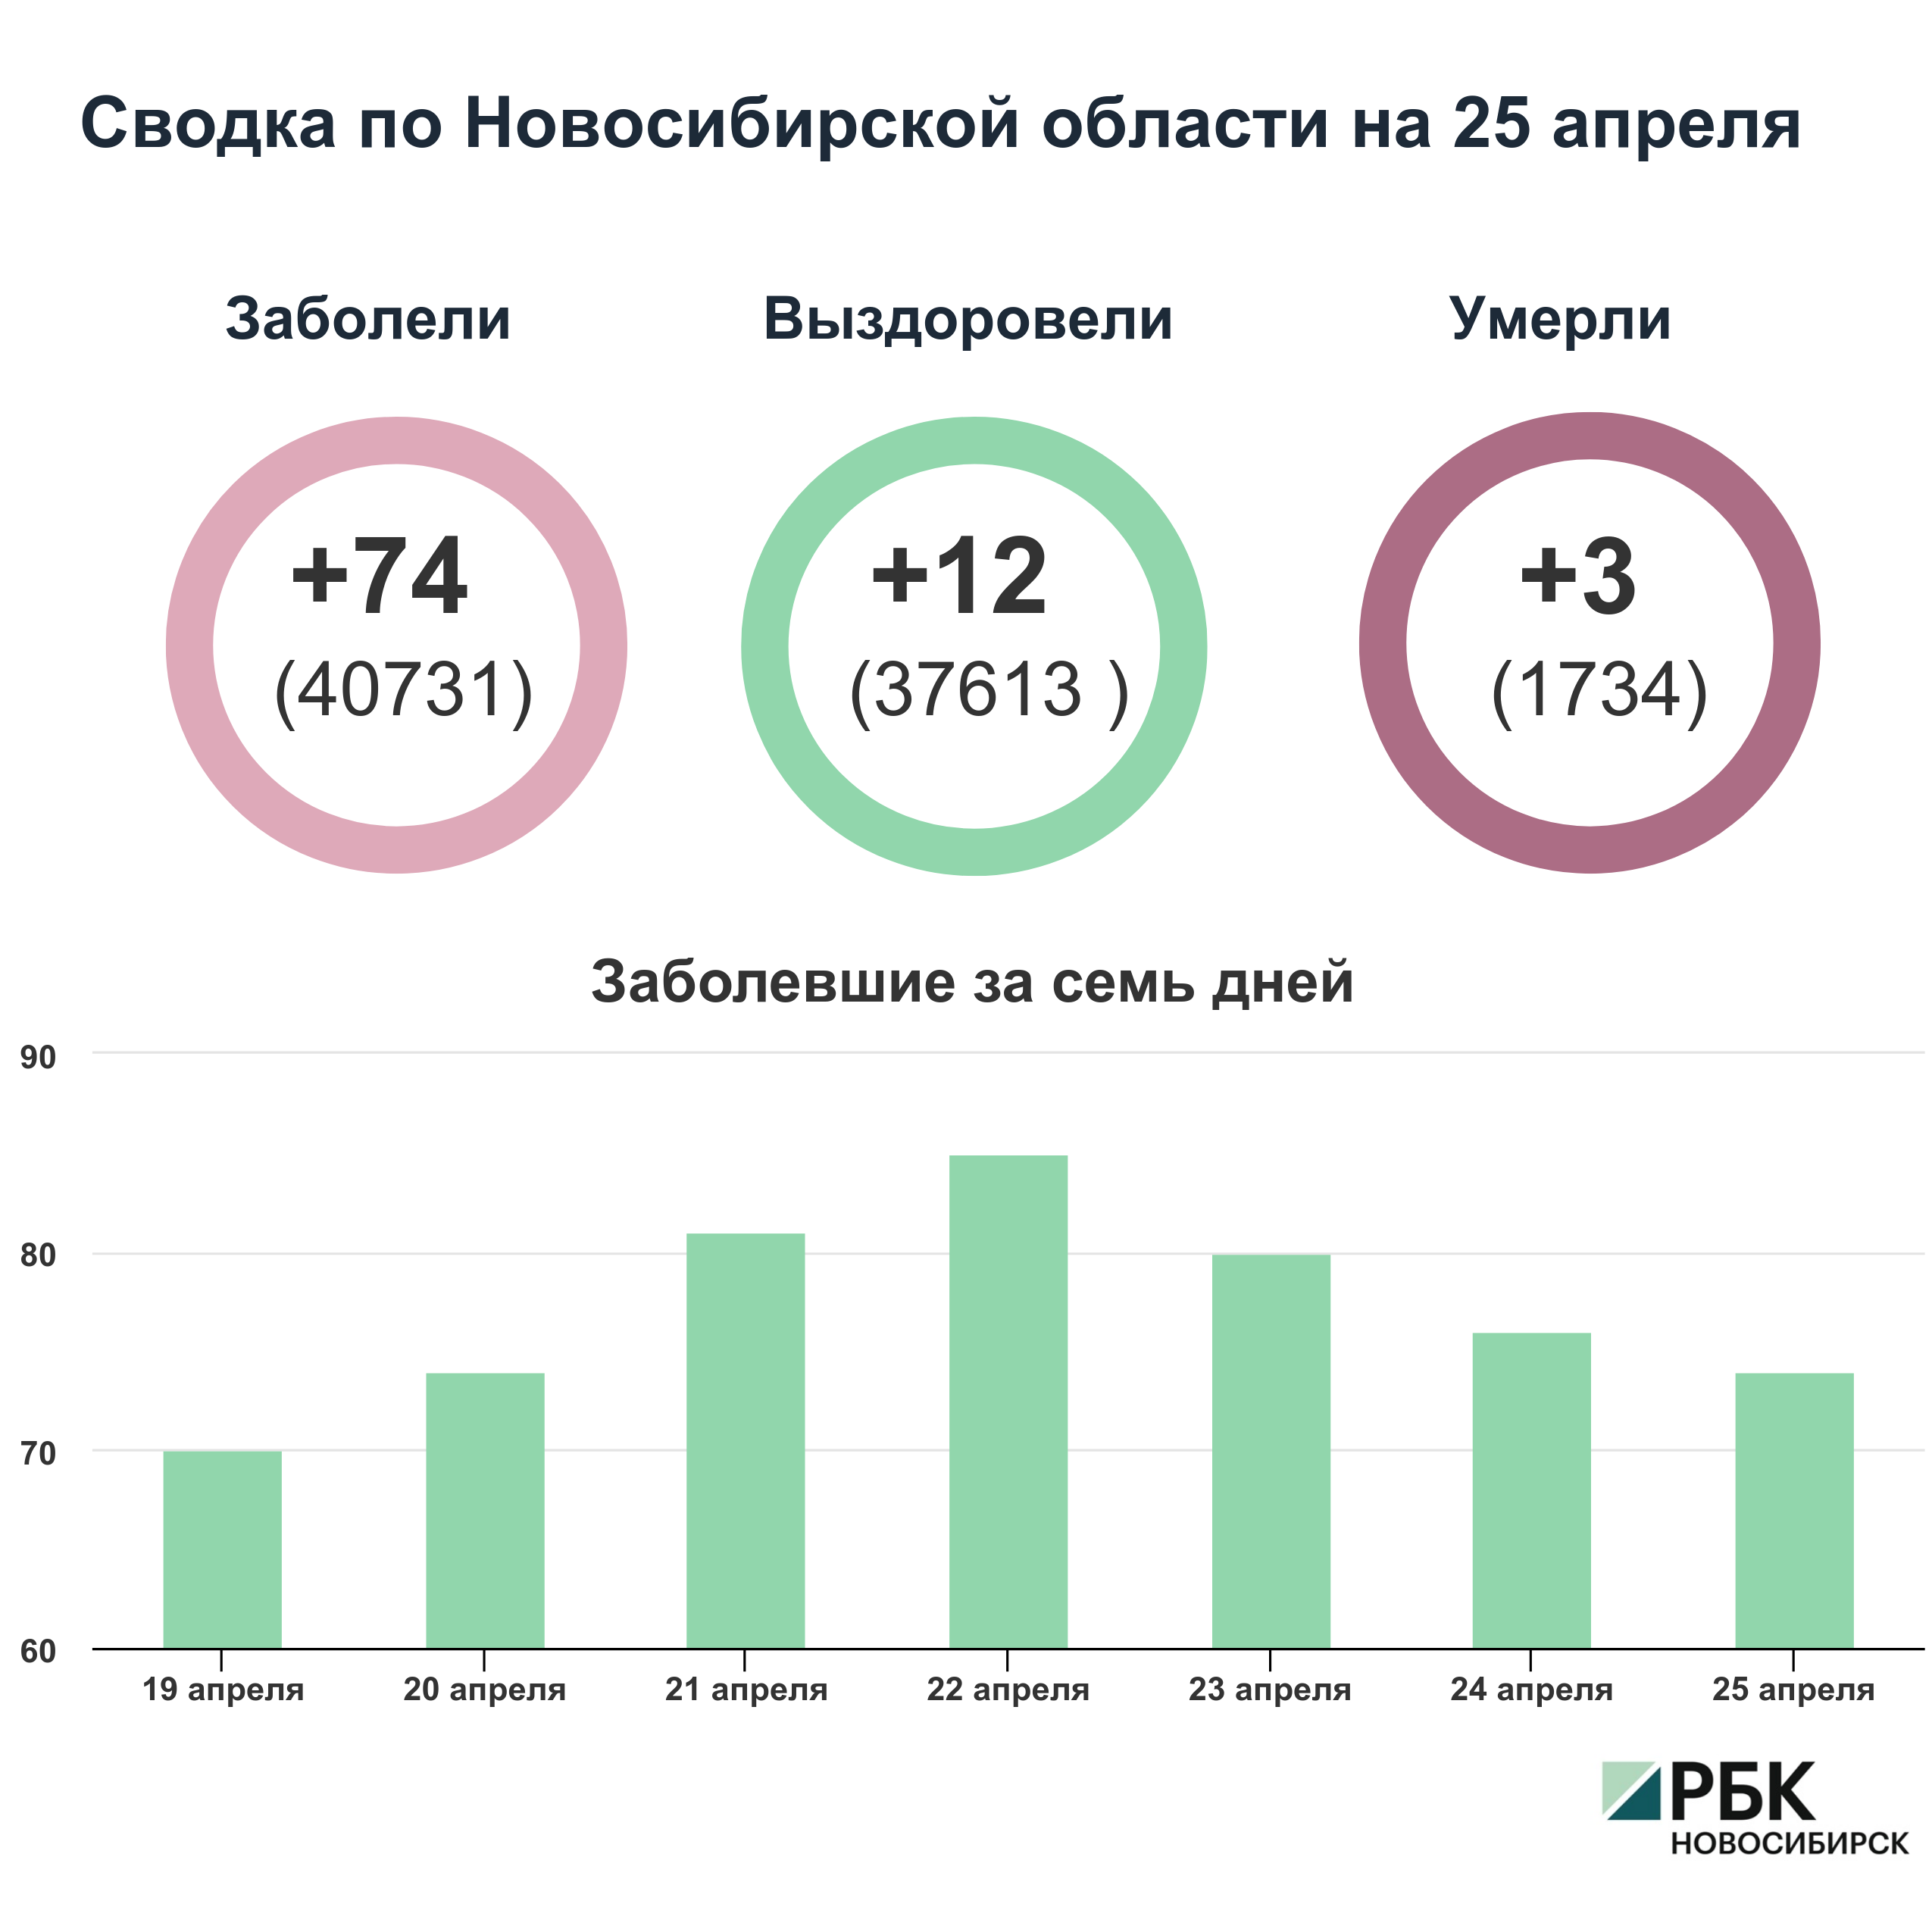 Коронавирус в Новосибирске: сводка на 25 апреля